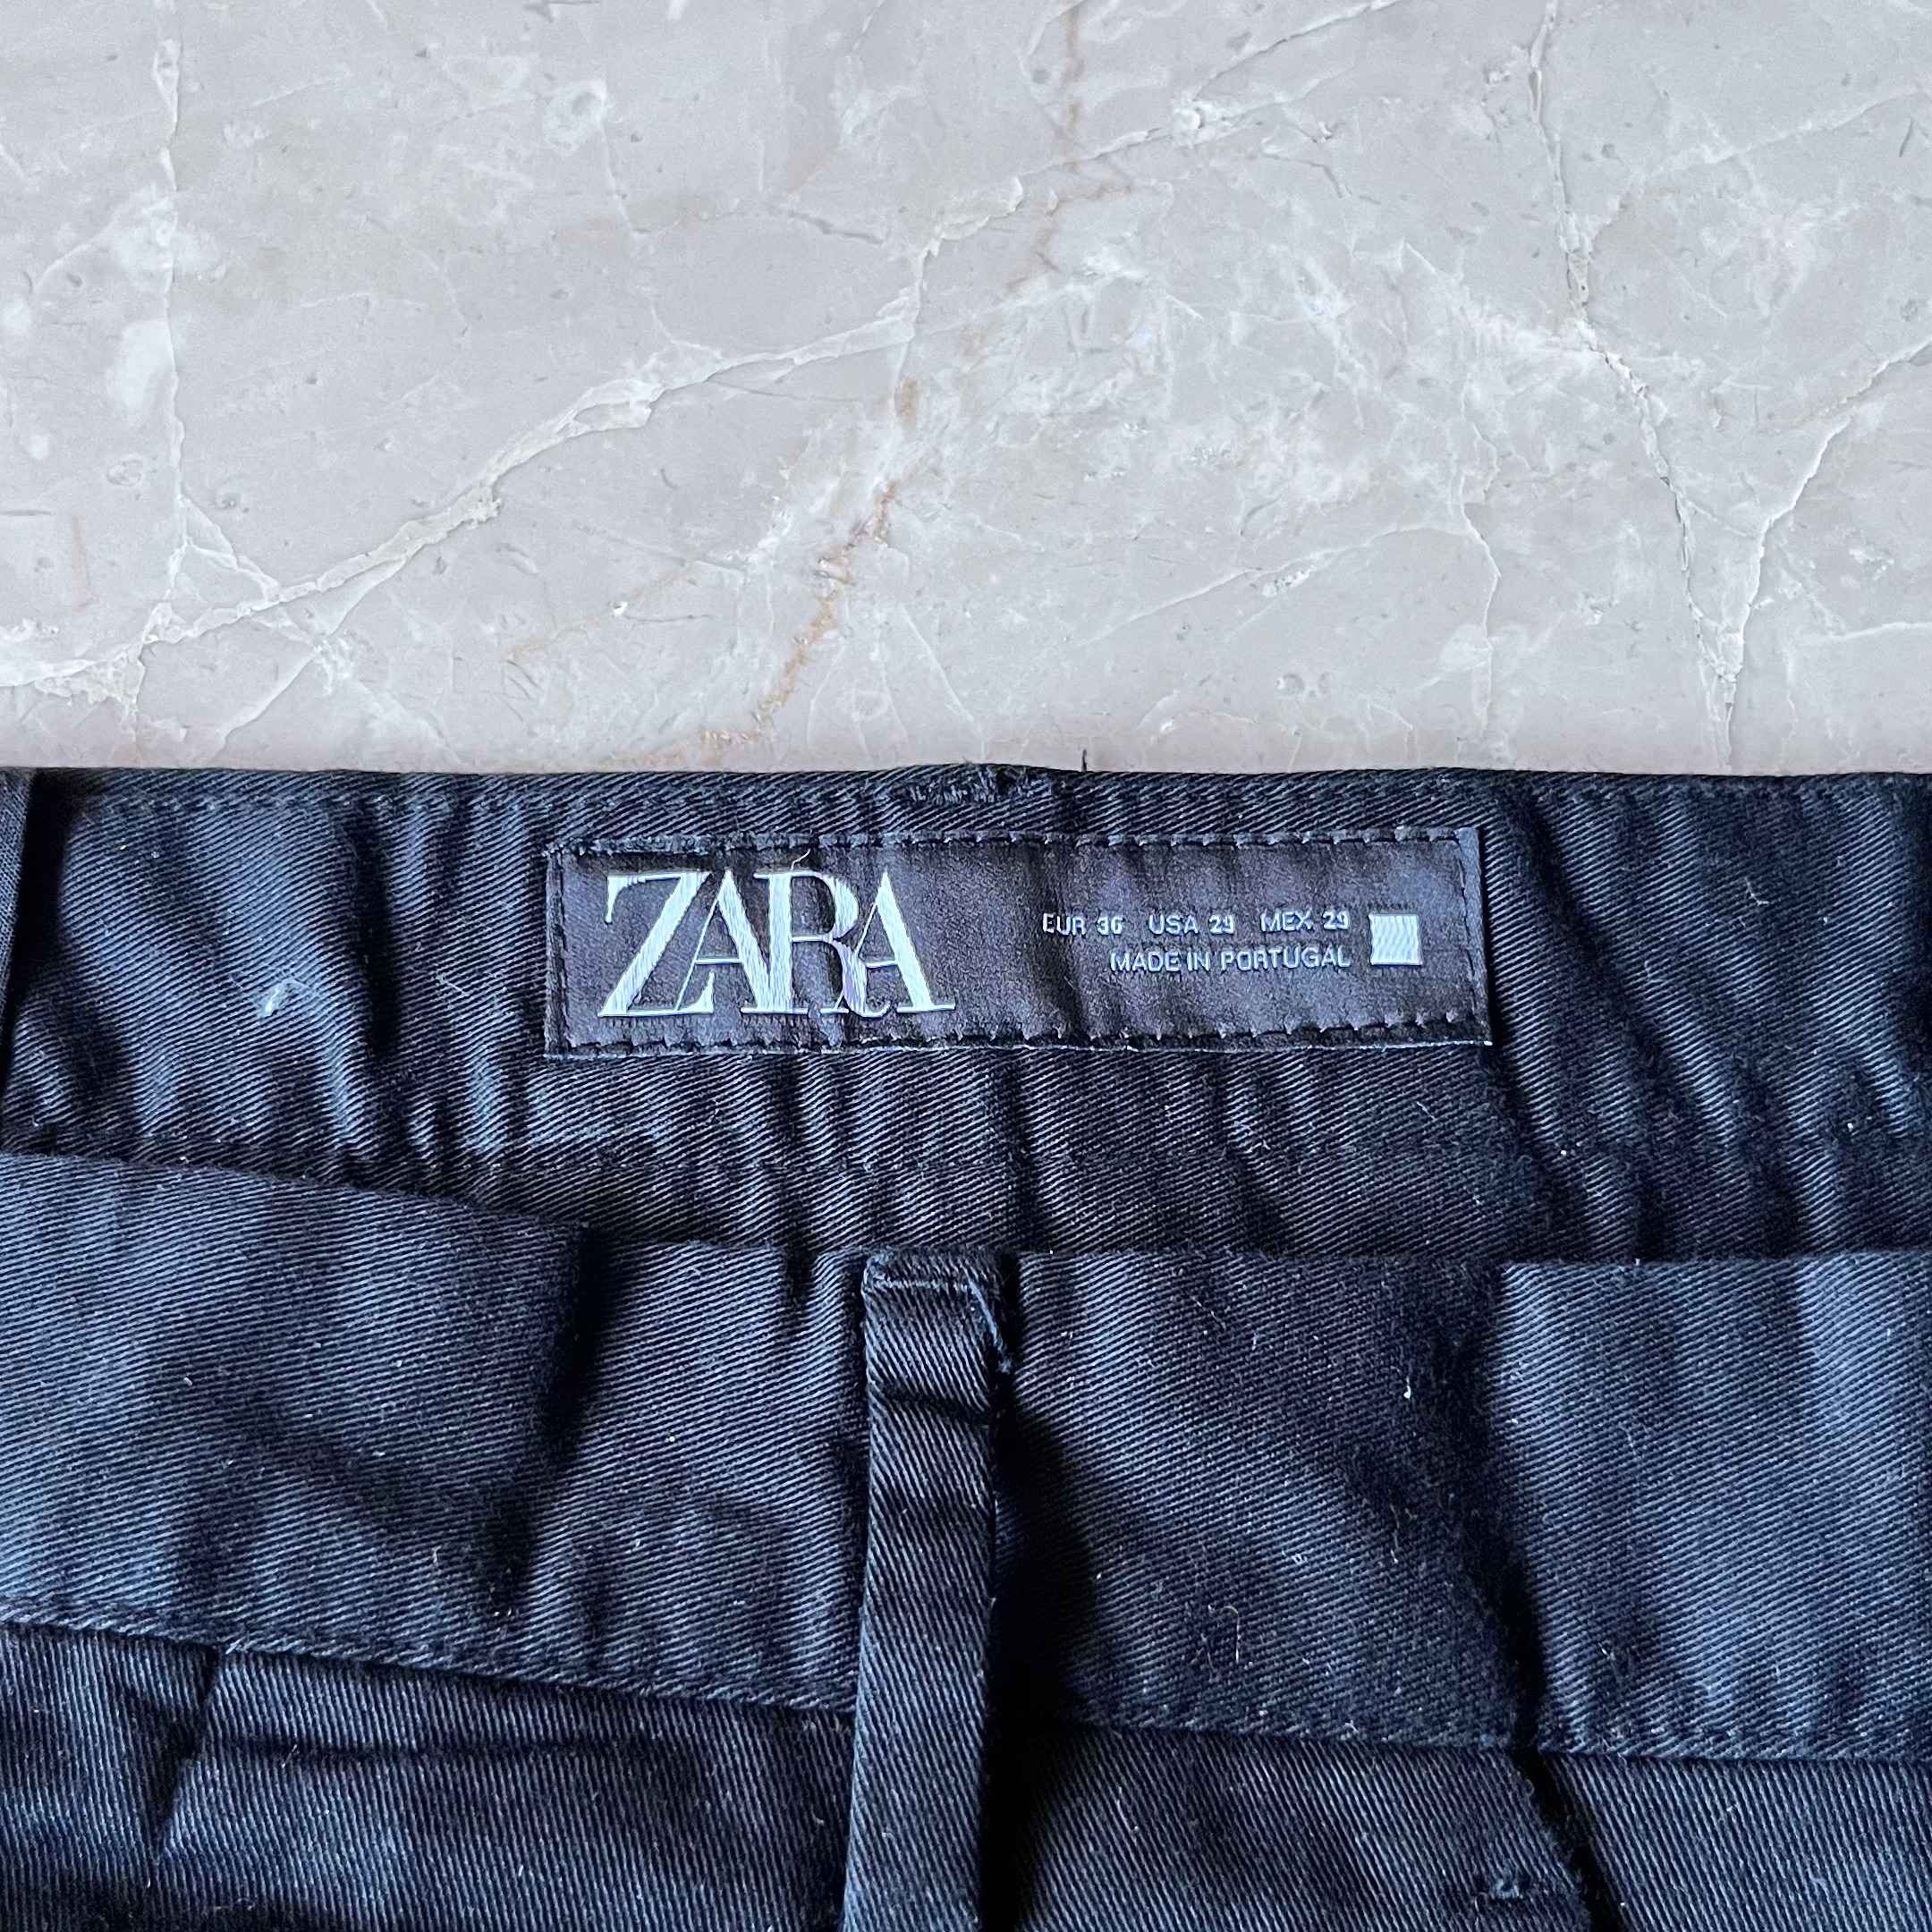 Zara Men's Black Pinstripe Trousers Size US 36 | eBay